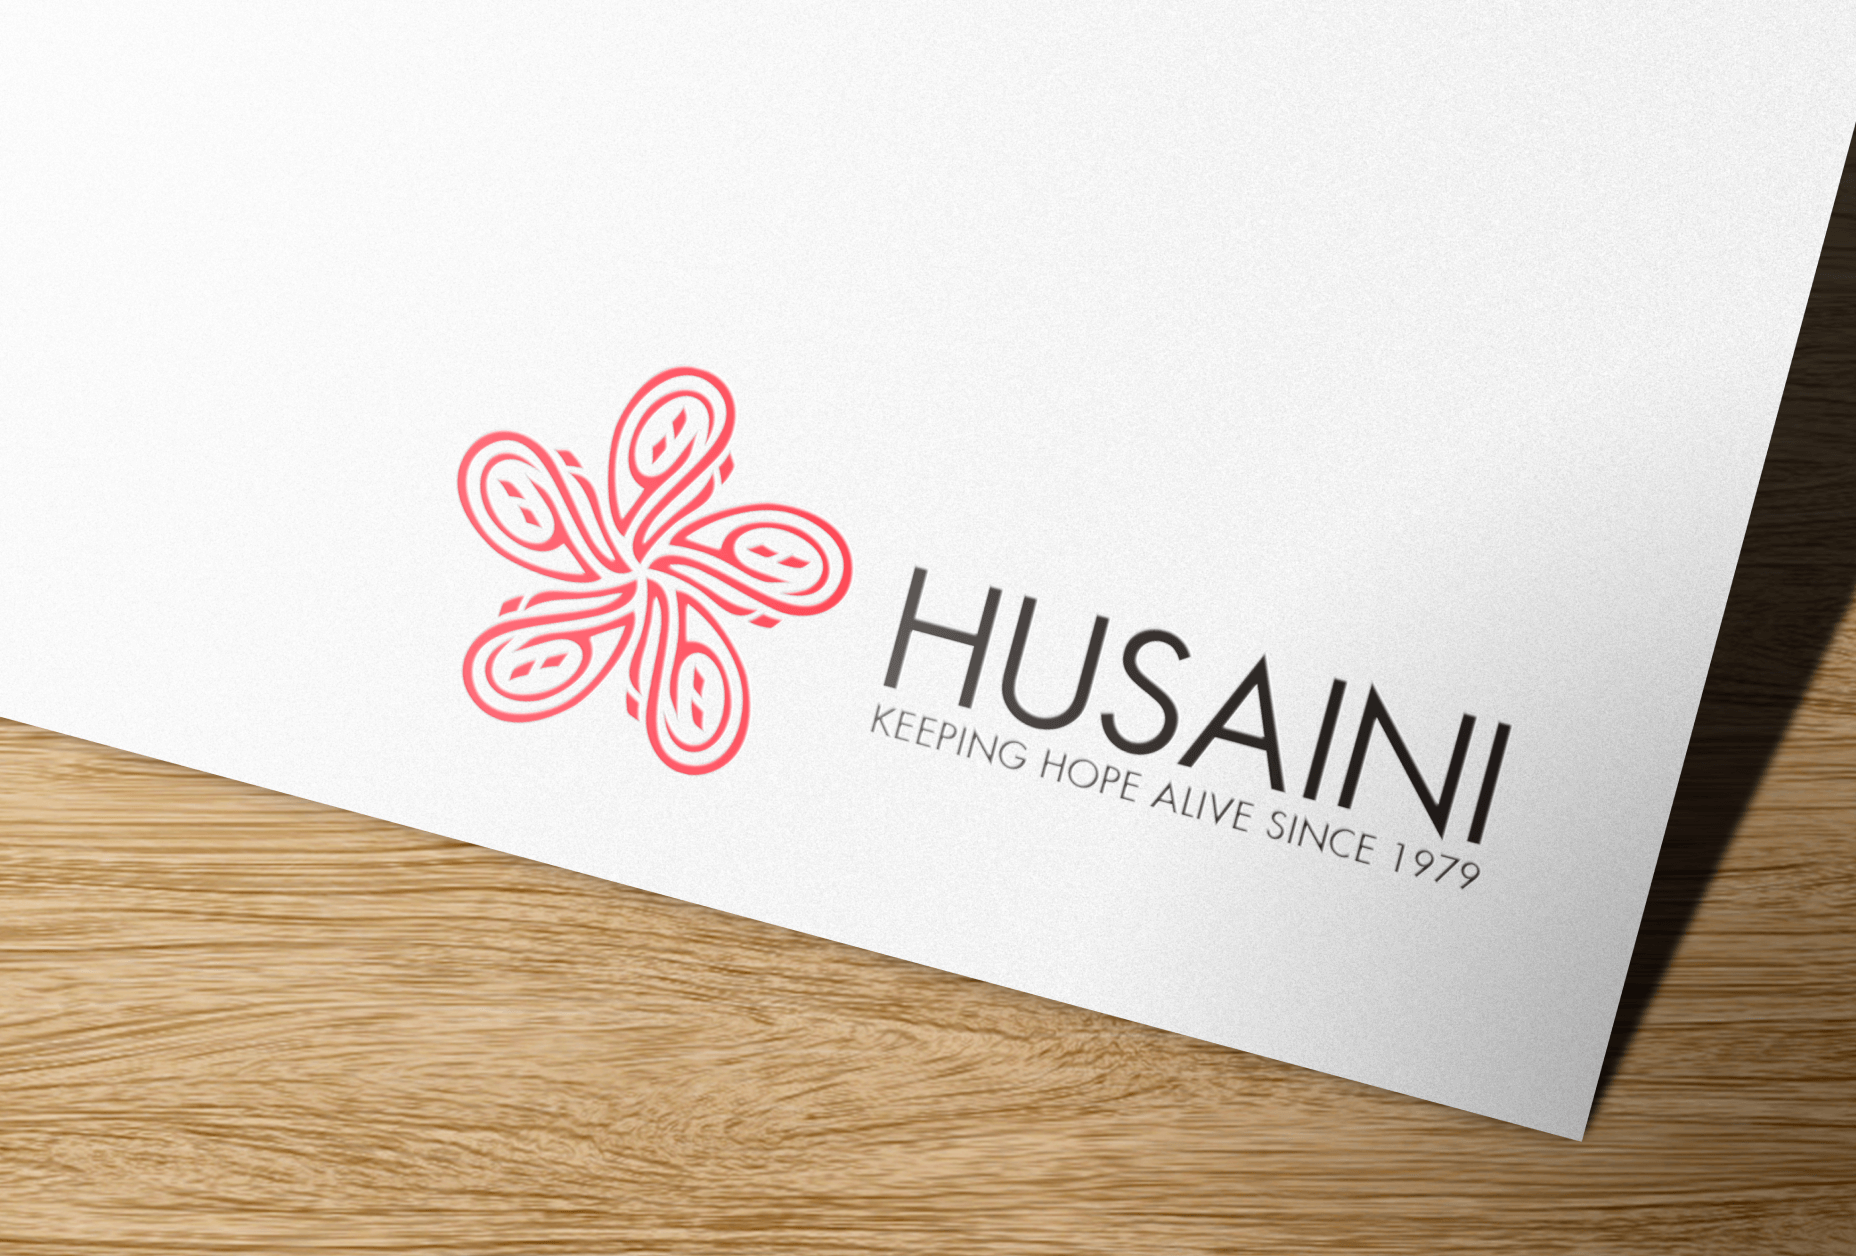 Husaini Blood Bank